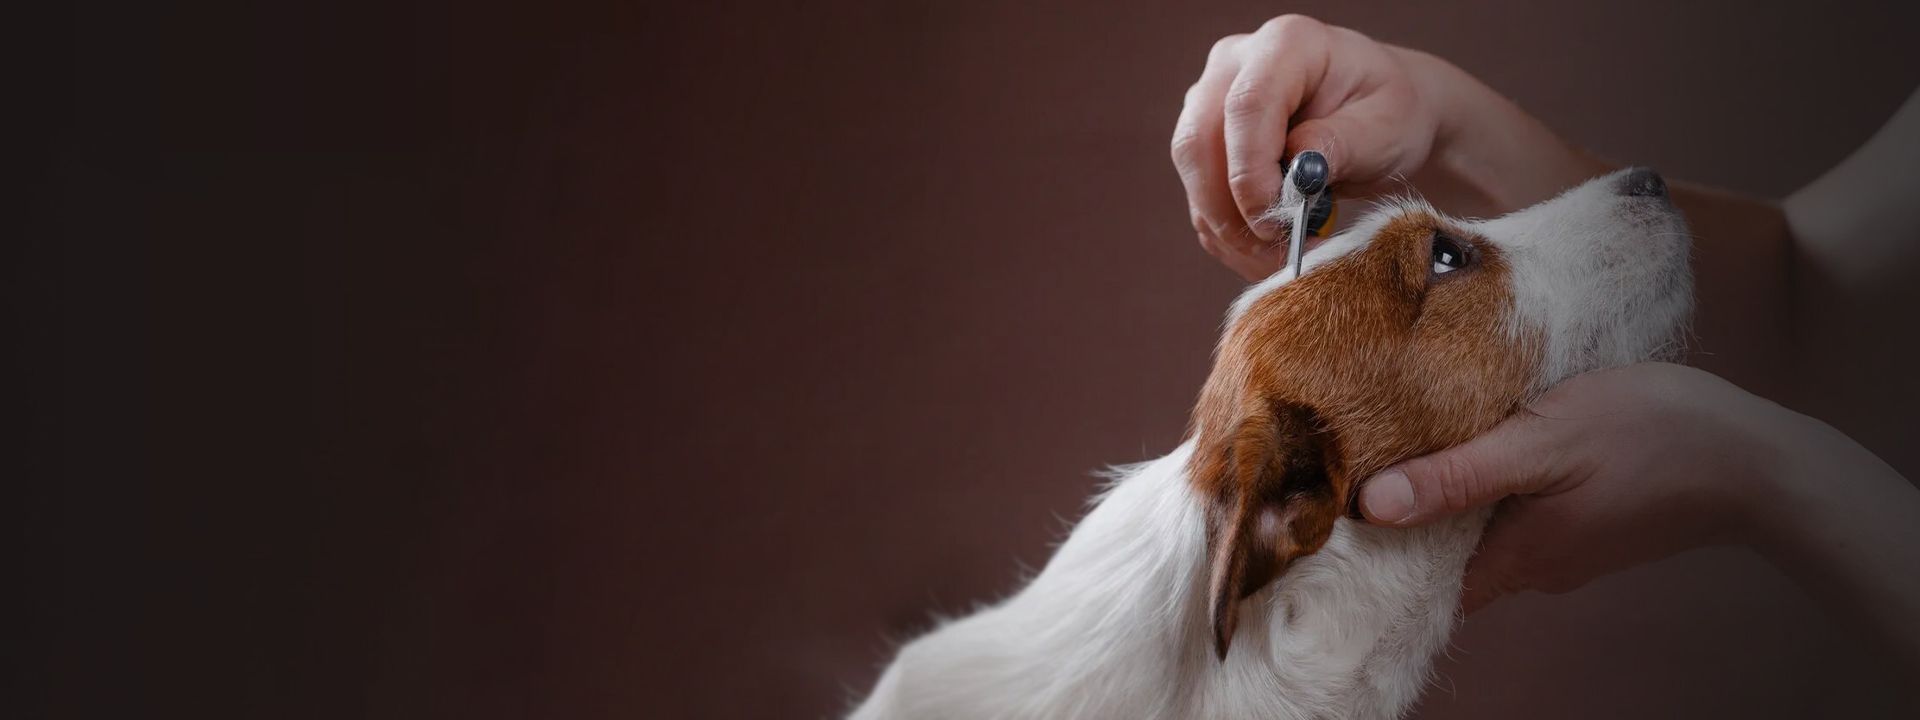 pet groomer brushing dog